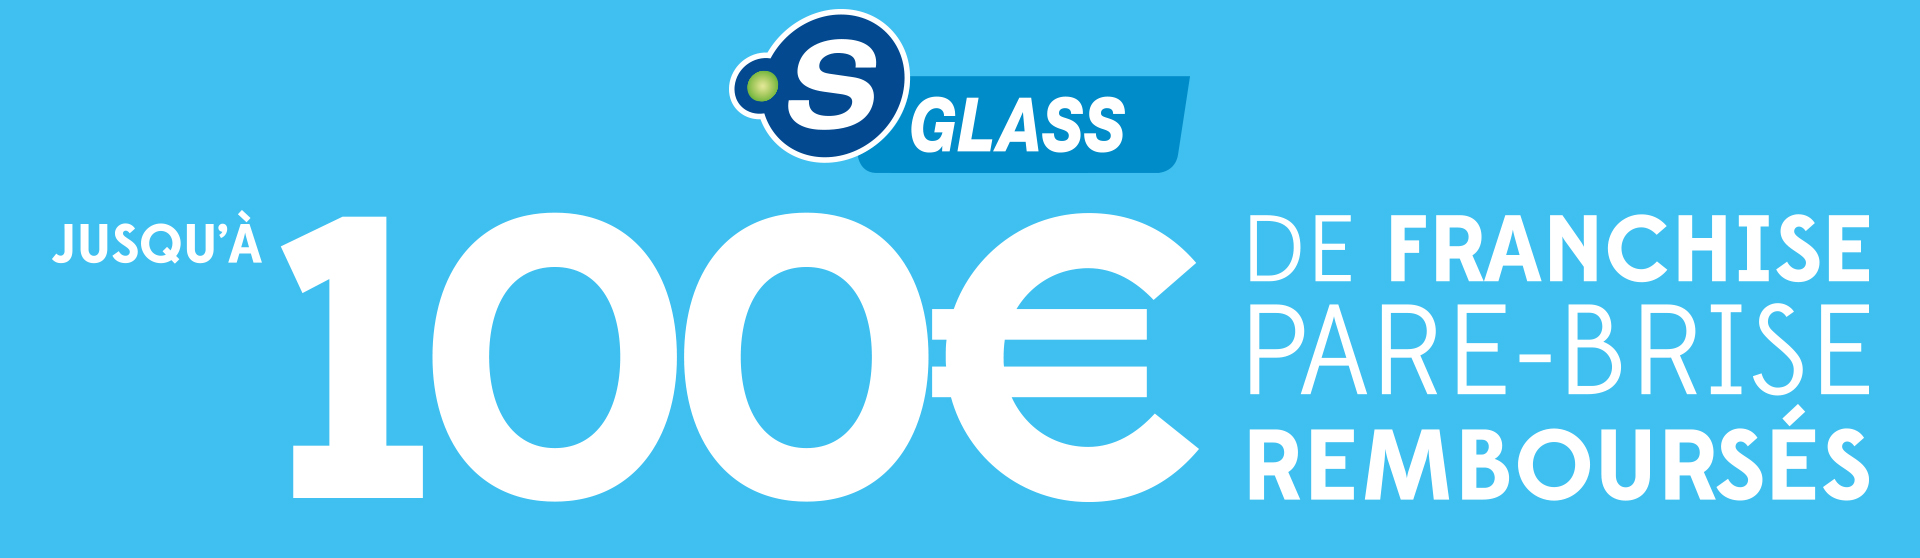 PointSGlass-Lodeve-100€deFranchiseOfferts-Desktop.jpg